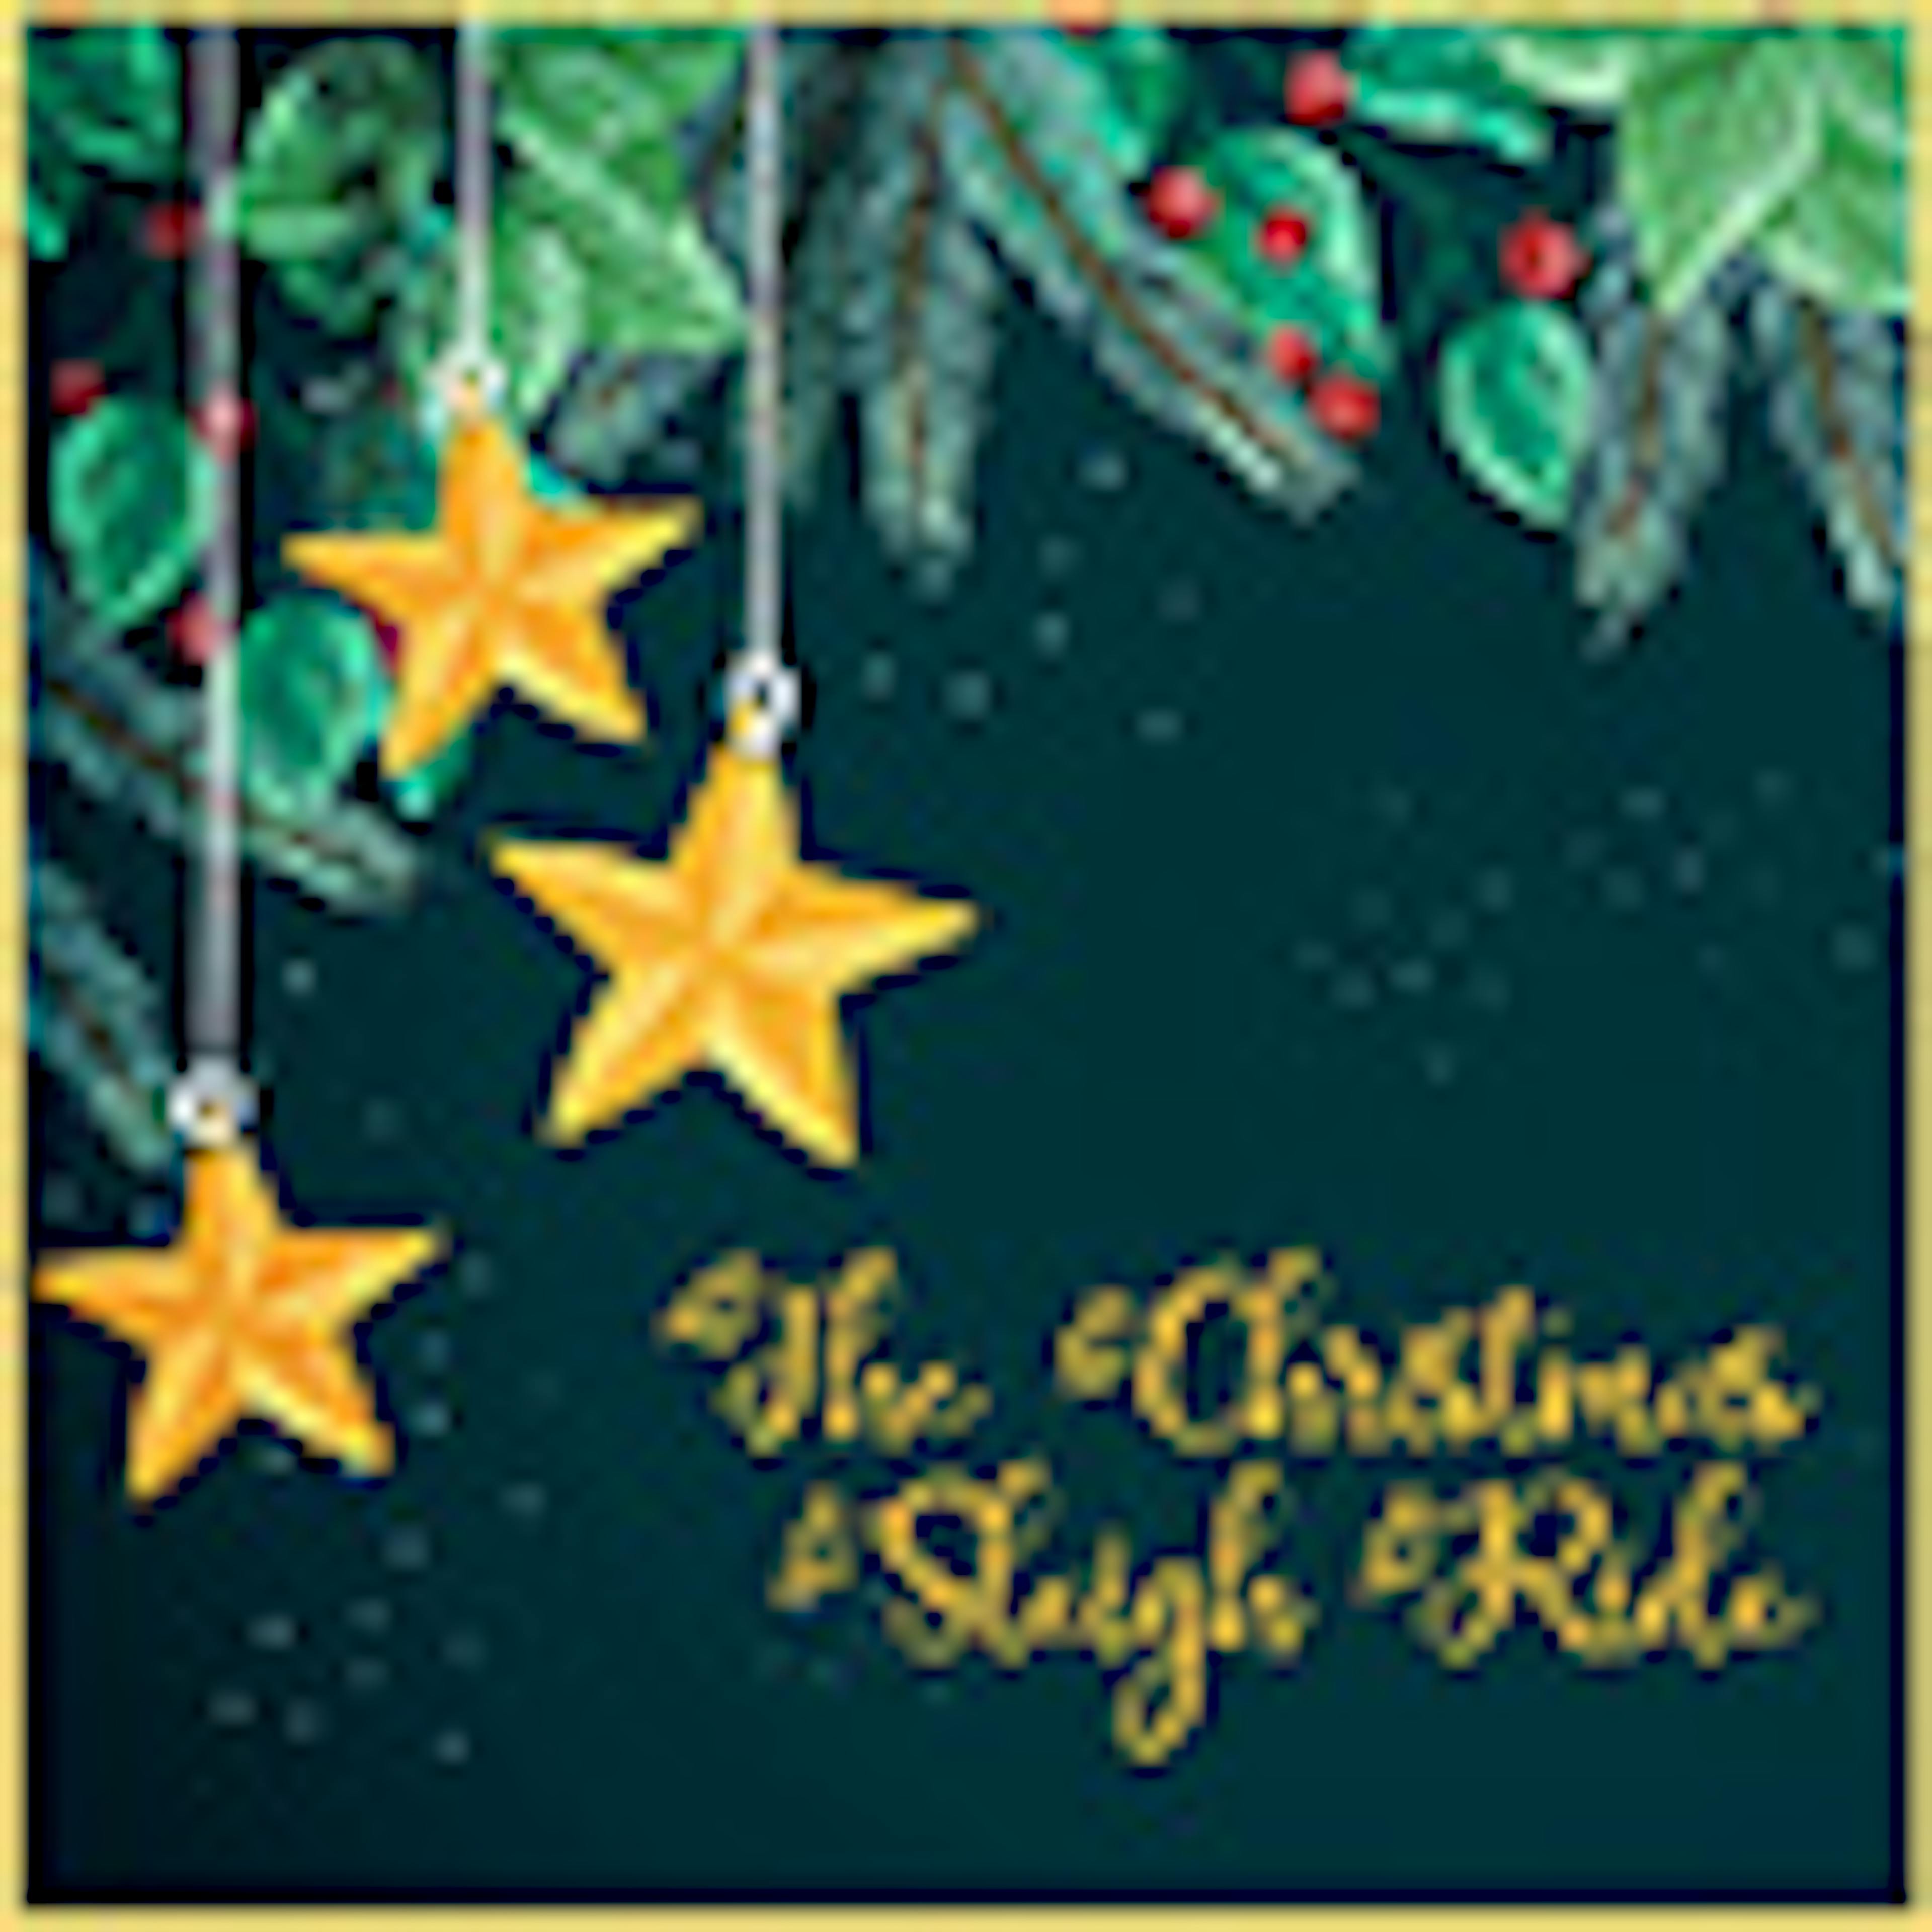 The Christmas Sleigh Ride album cover